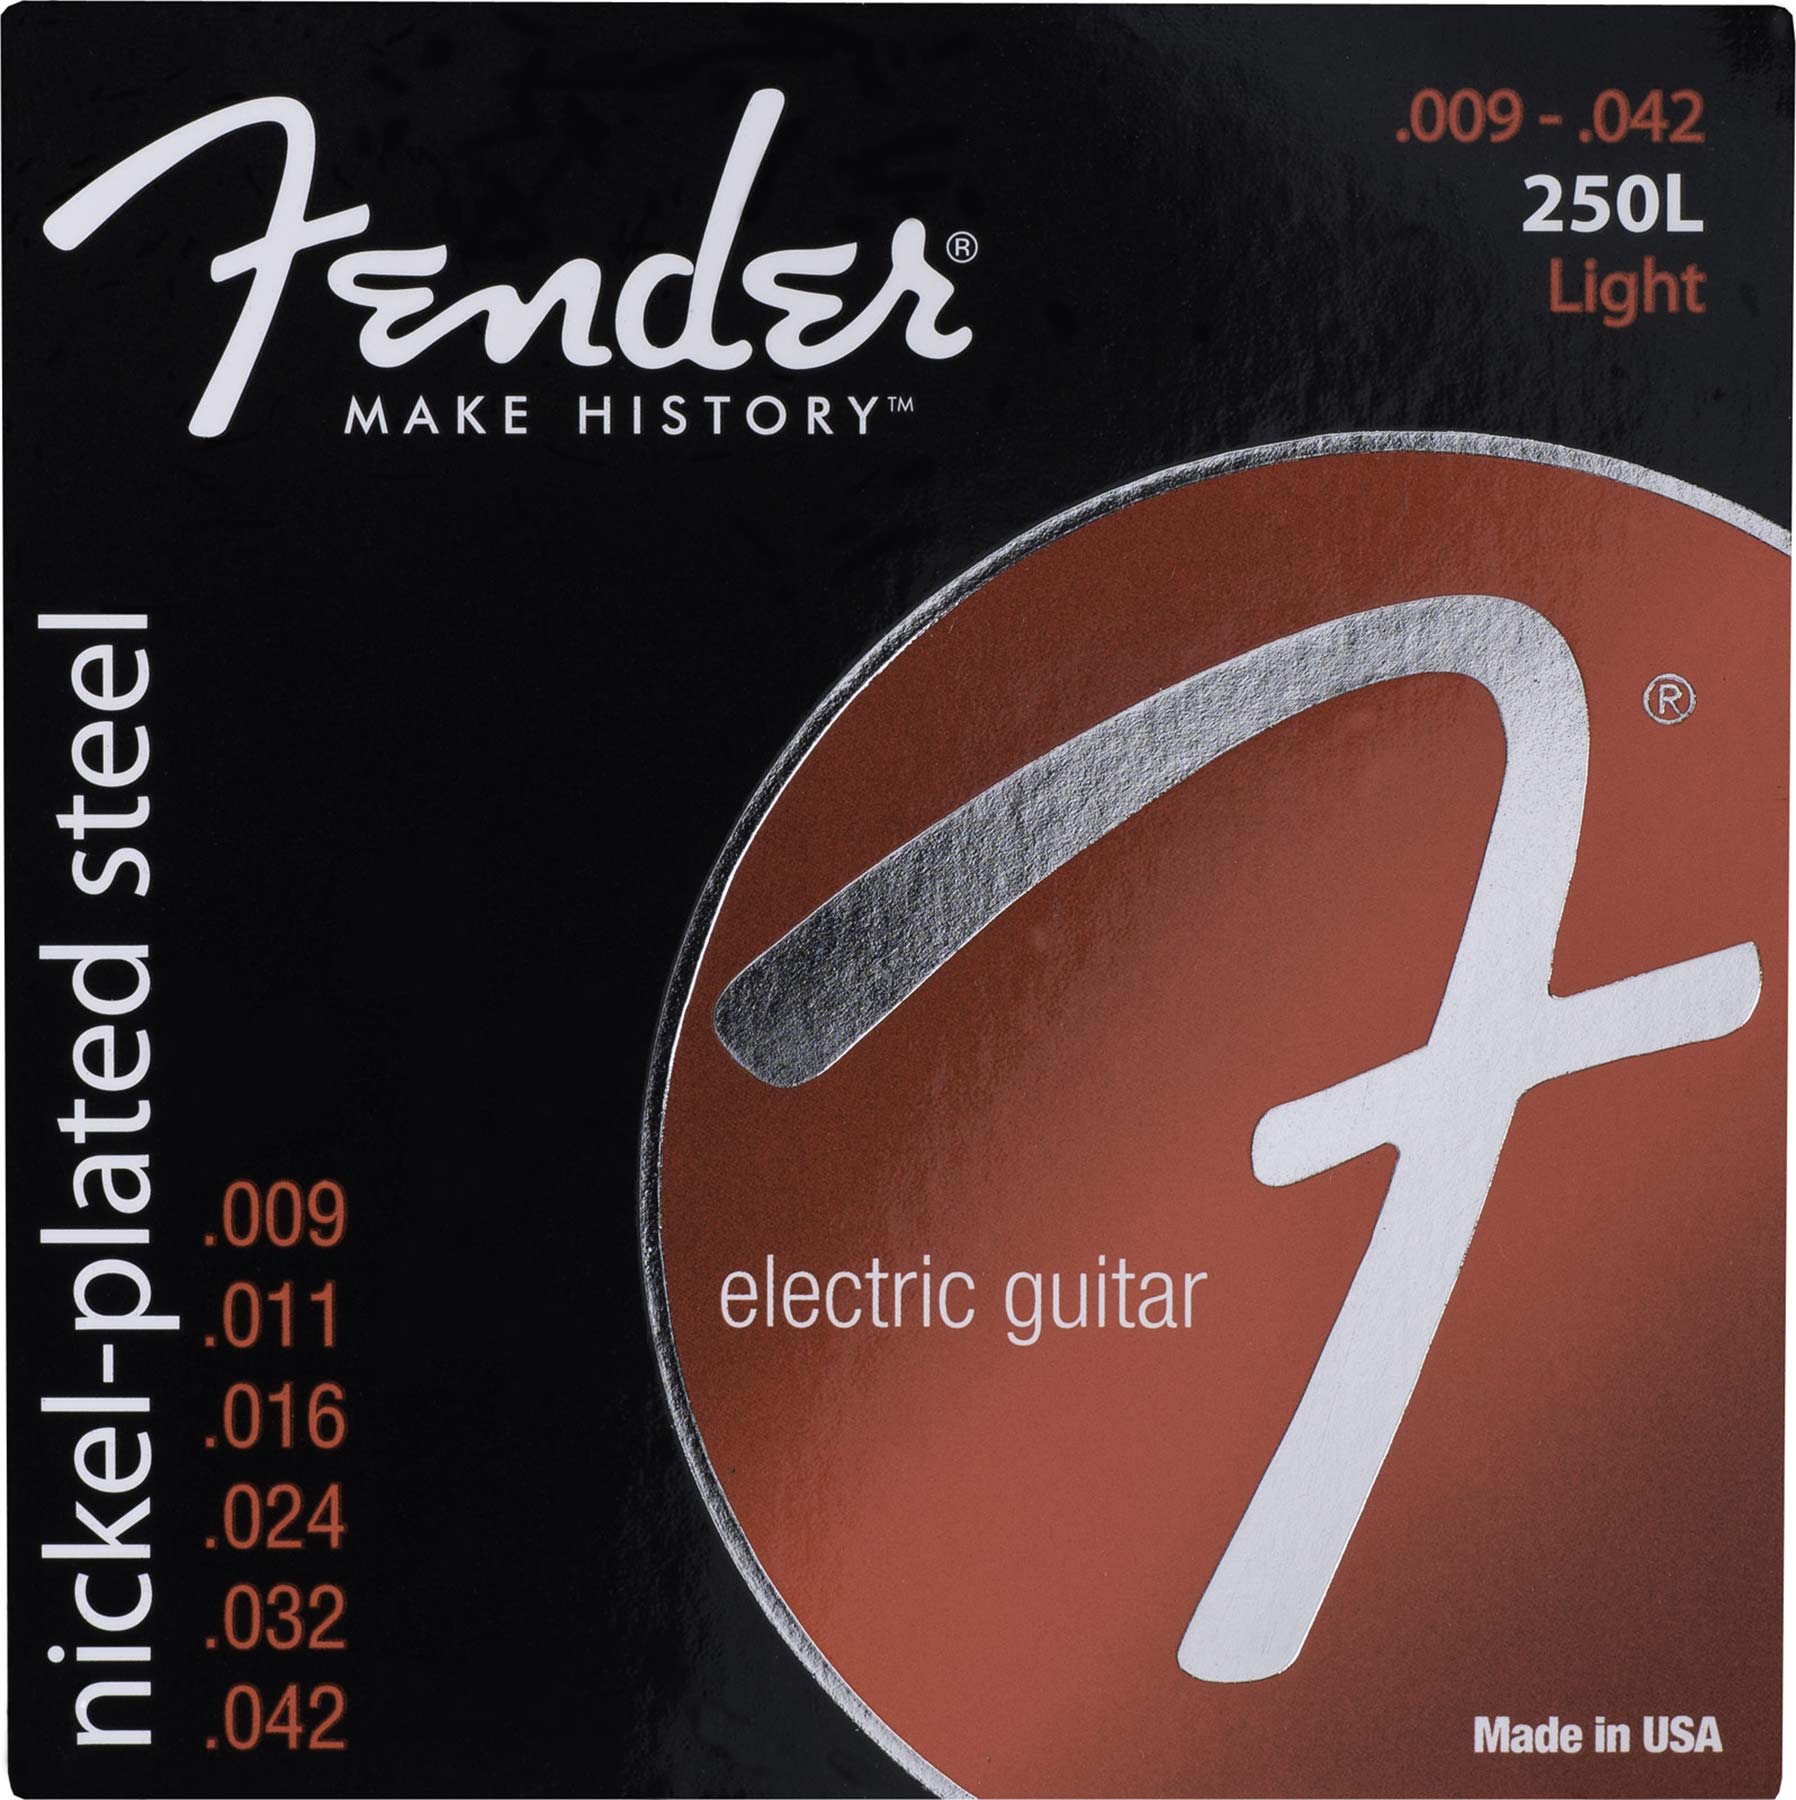 FENDER 250L NICKEL-PLATED LIGHT ELECTRIC GUITAR STRINGS .090-.042